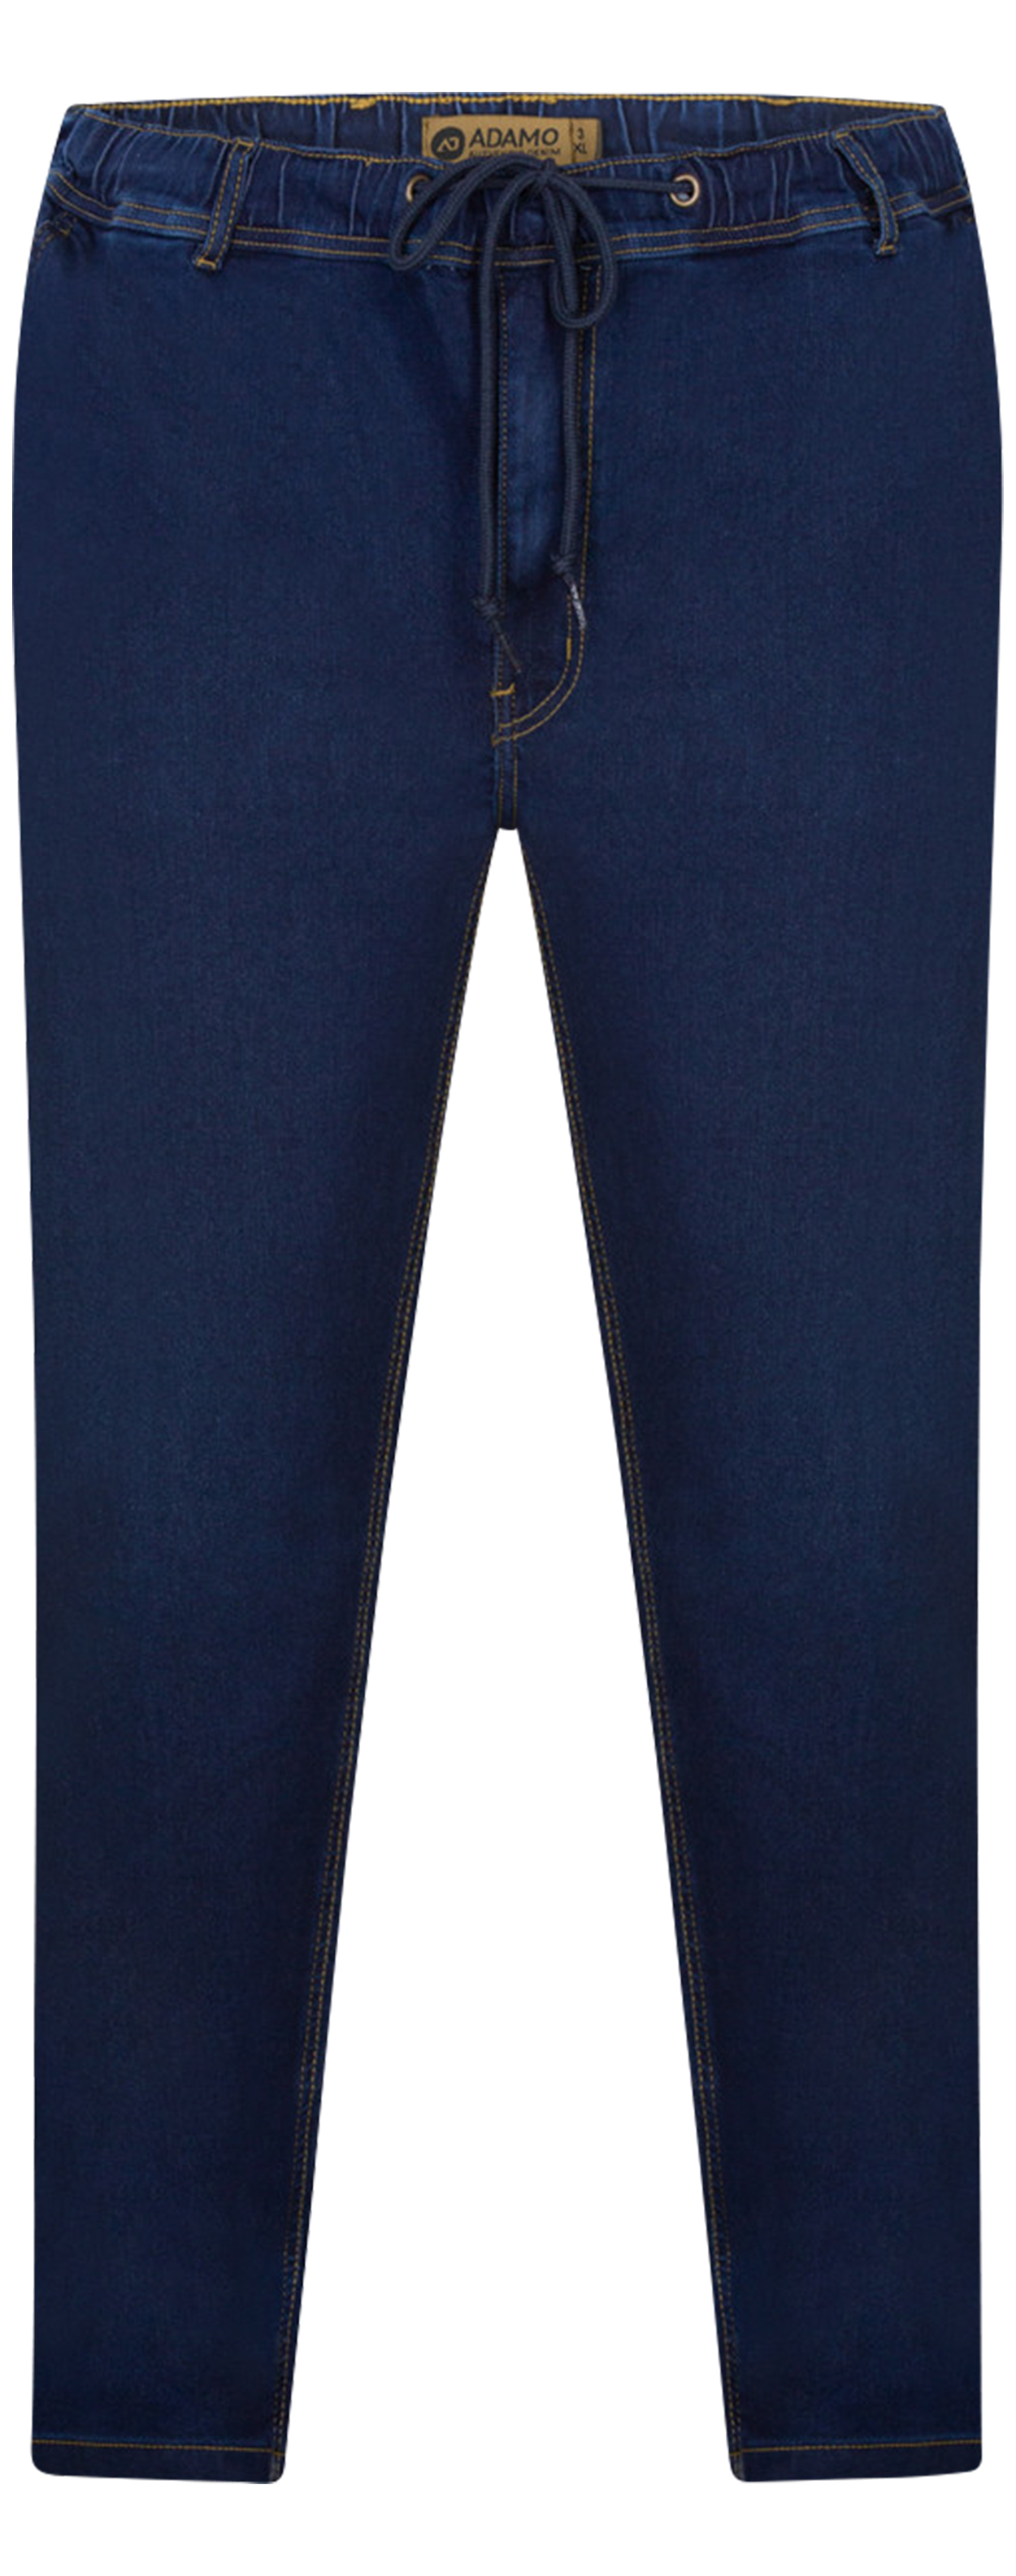 pantalon jegging adamo texas en coton mélangé bleu coupe slim